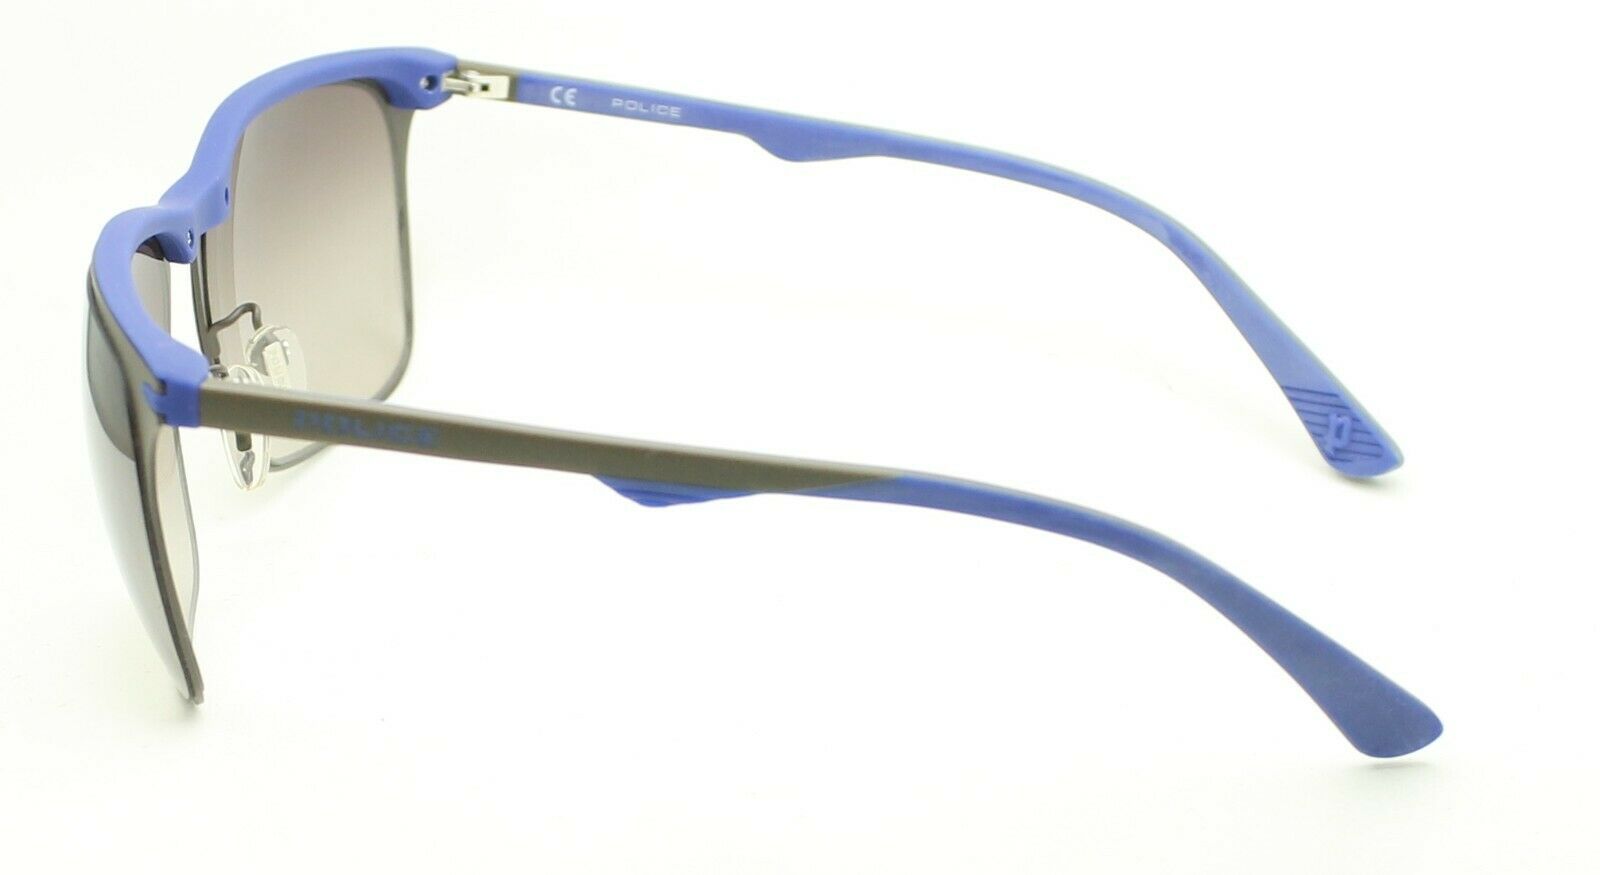 POLICE TWO SOULS 5 SPL 580 COL. 0F13 58mm  Sunglasses Shades Eyewear Frames New